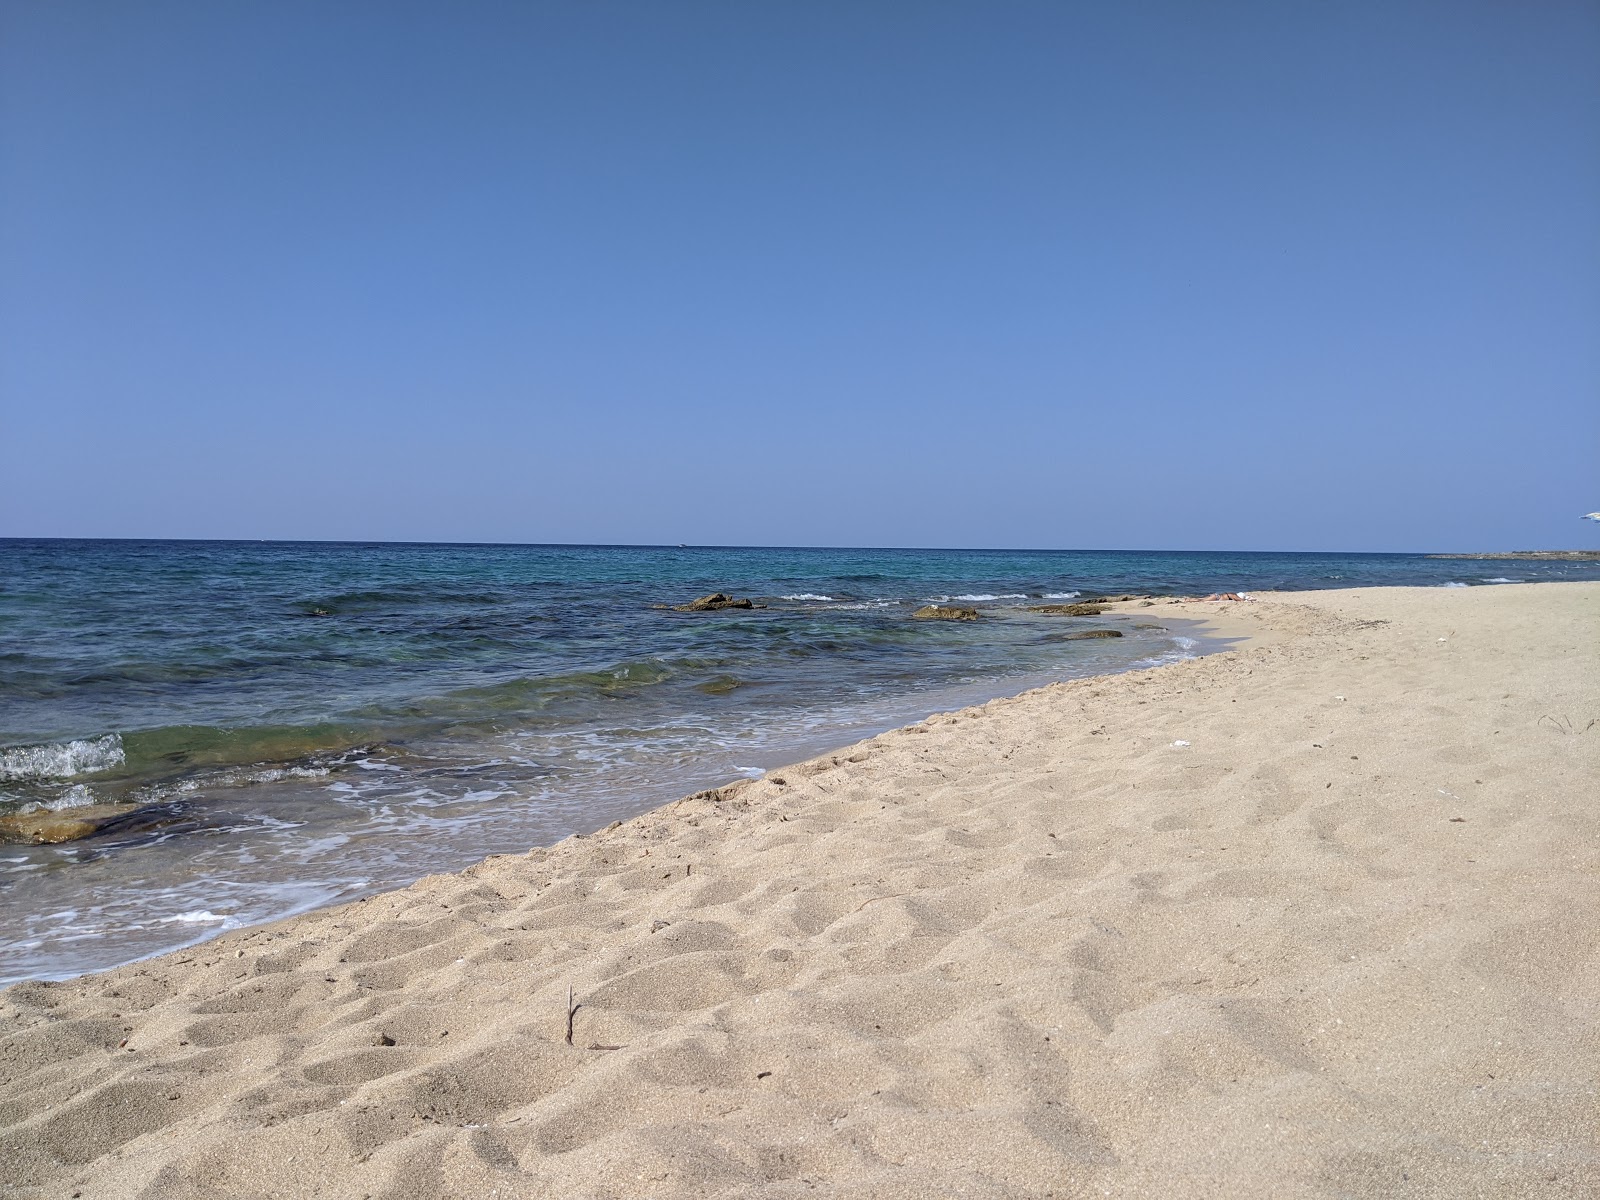 Spiaggia di Punta Cacata'in fotoğrafı geniş plaj ile birlikte